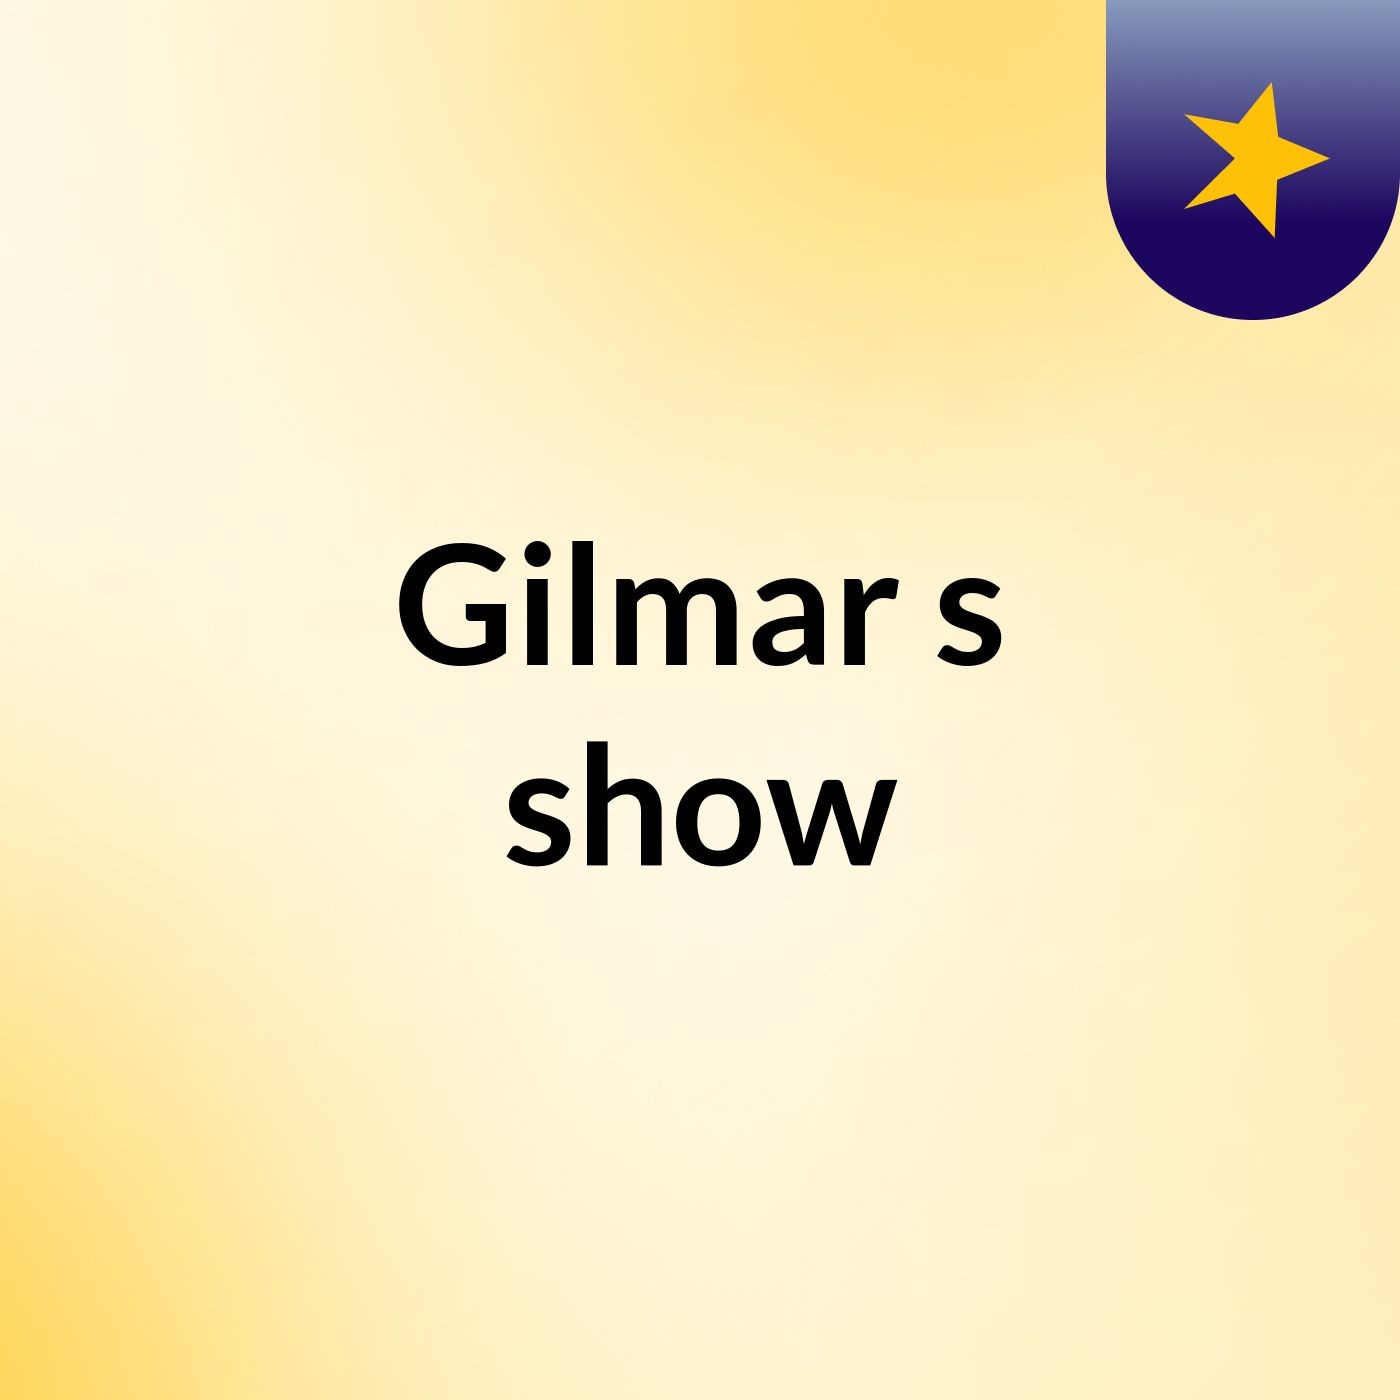 Gilmar's show